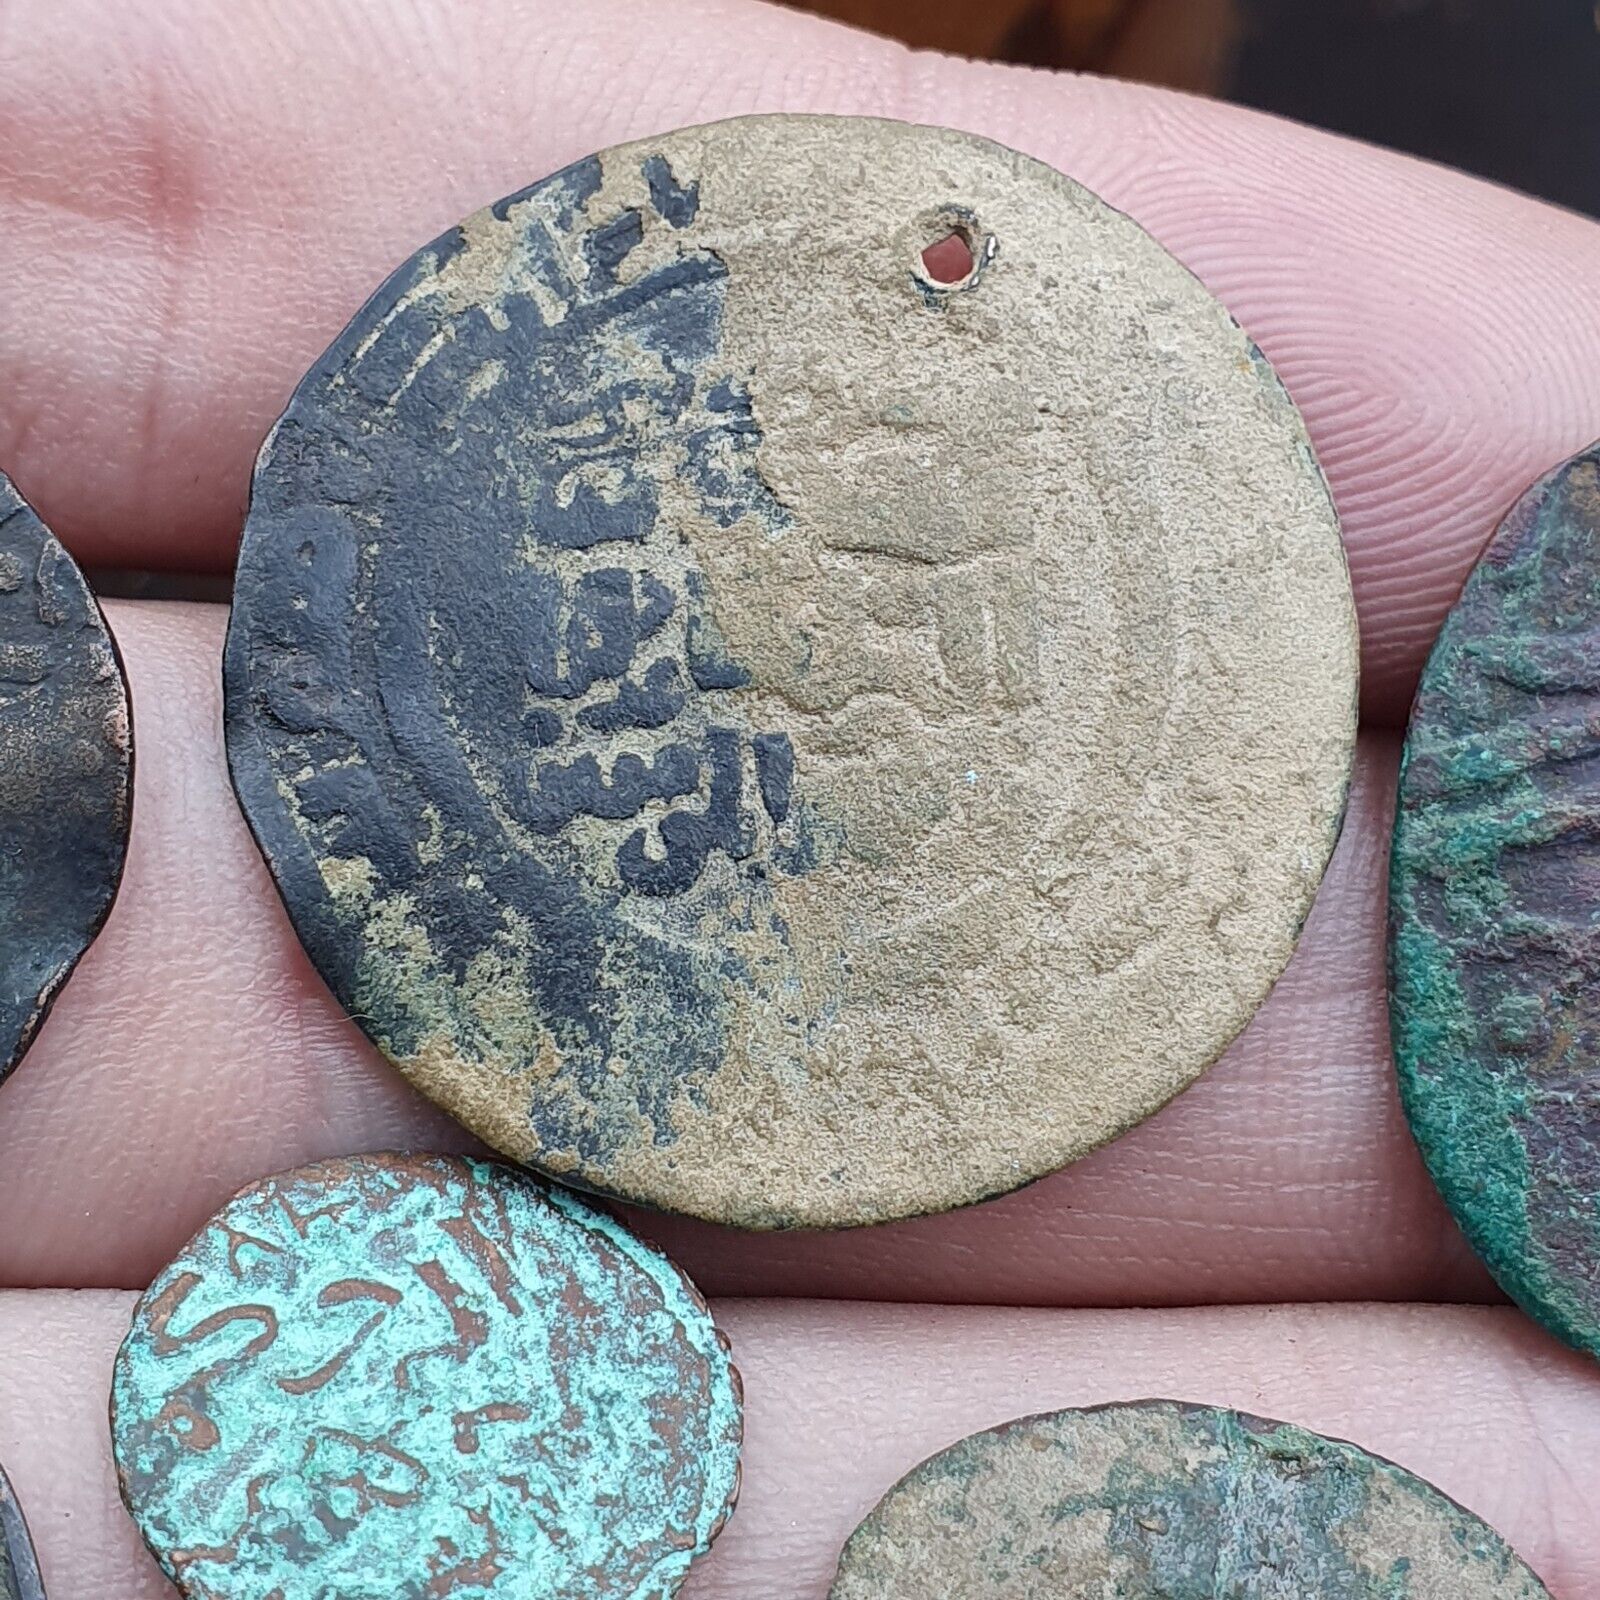 8 Antique Islamic coins Himyar, Abbasid, Himyarite Kingdom, Ottoman Empire